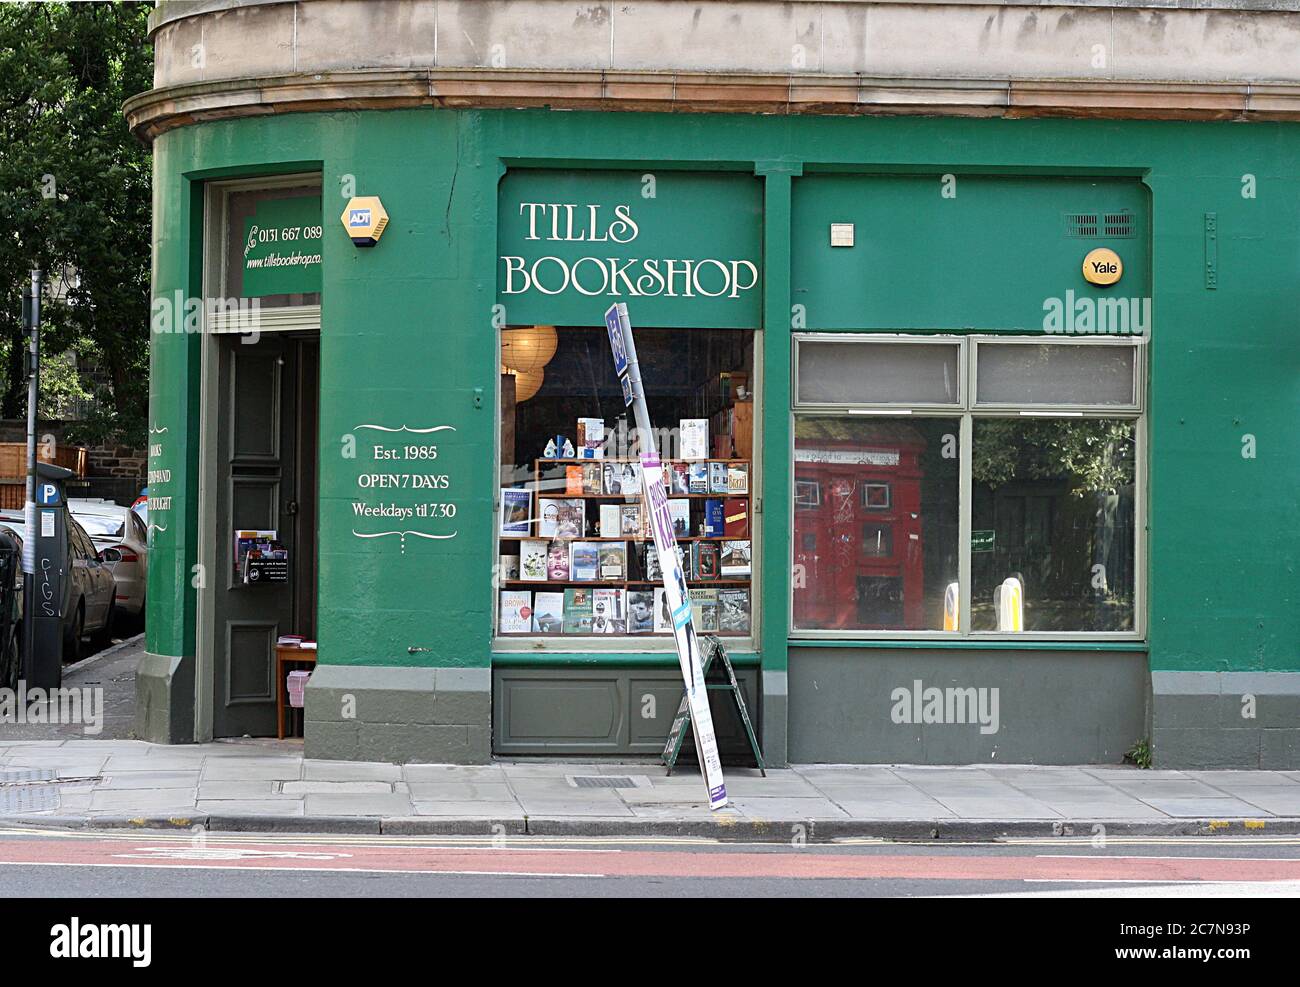 Edinburgh, Scotland - 30 July 2014: Green storefront of Tills Bookshop, a secondhand independent bookshop near The Meadows. Stock Photo